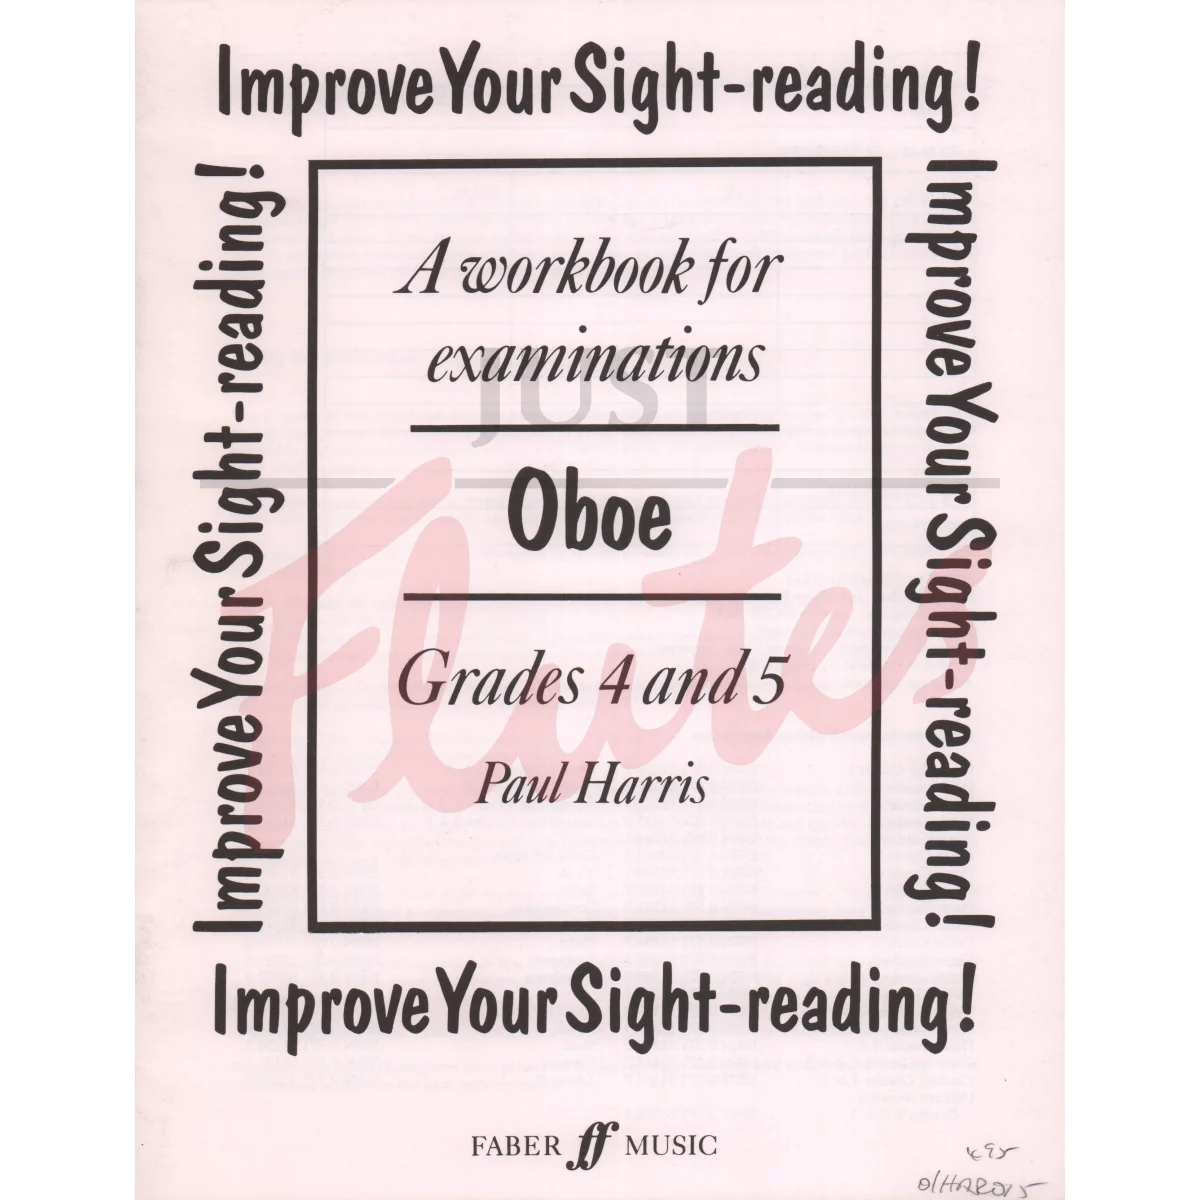 Improve Your Sight-Reading! [Oboe] Grades 4-5